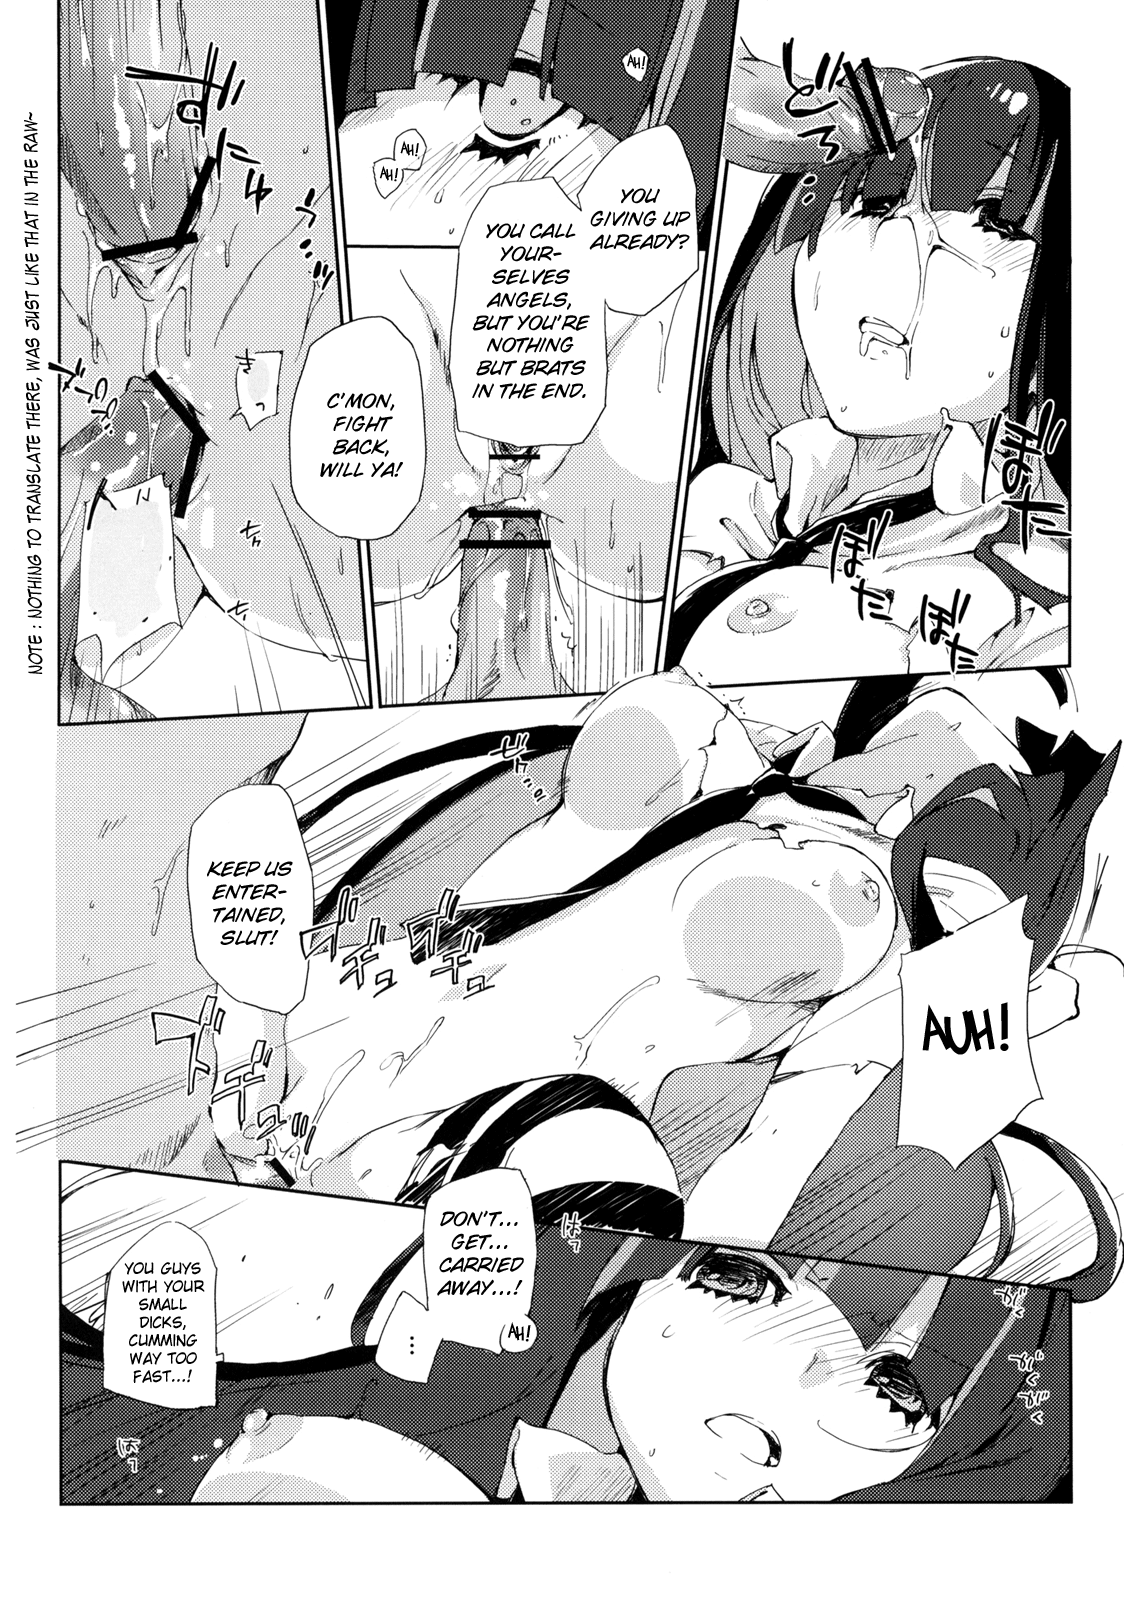 inmoral unmoral hentai manga picture 18